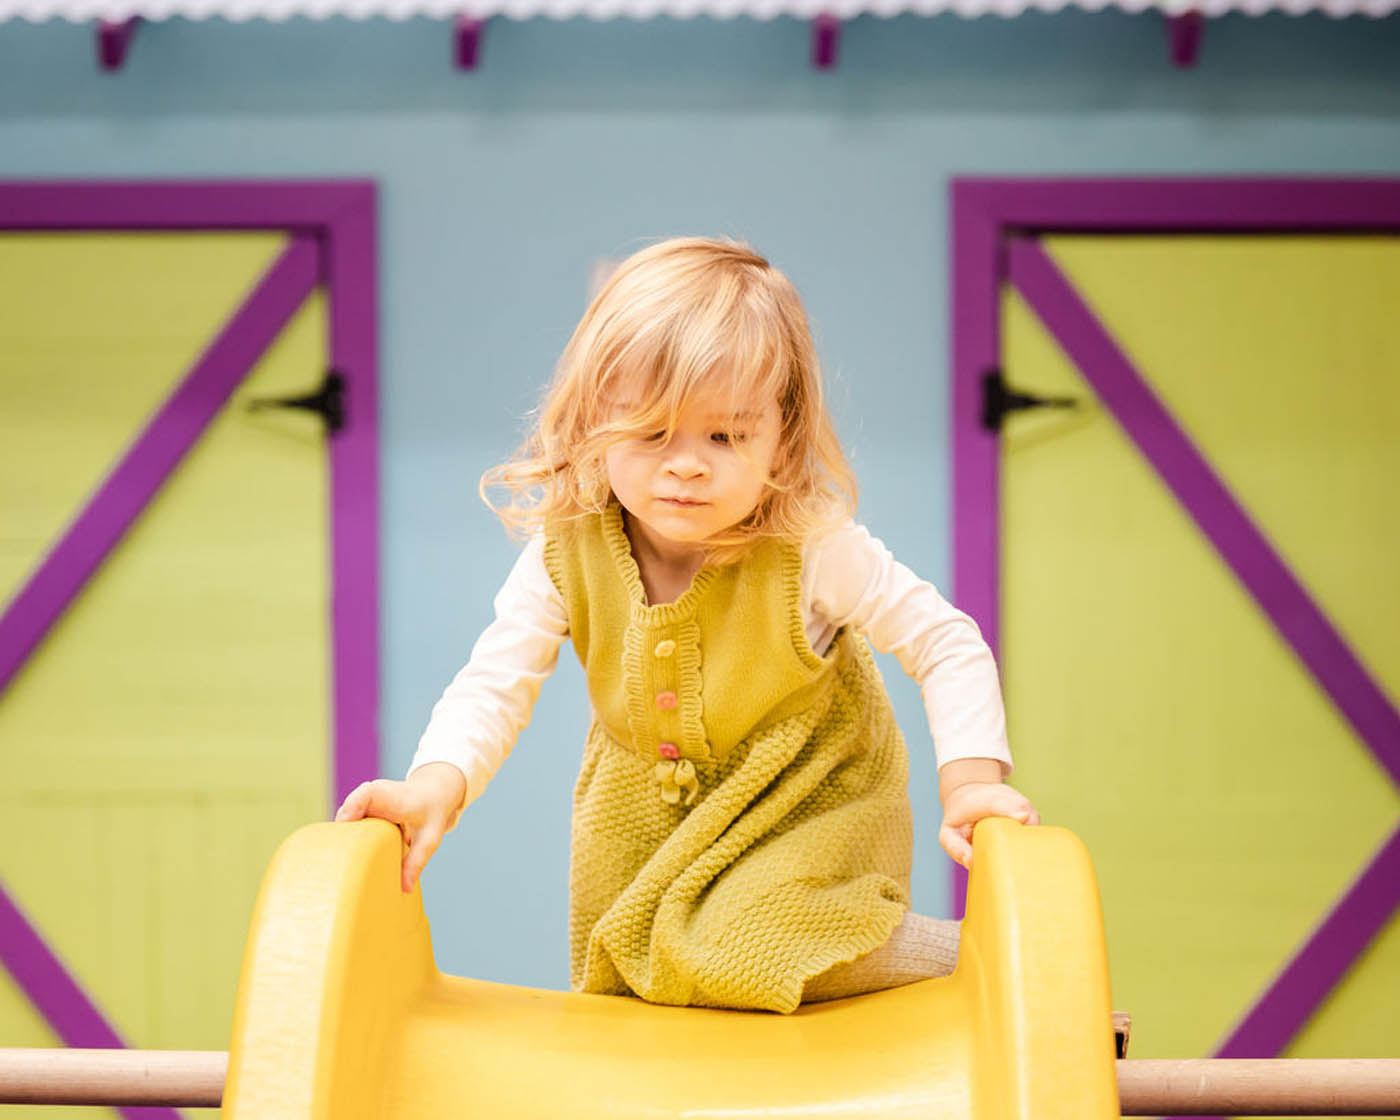 A girl climbing up a yellow slide enjoying open play in Katy, TX.